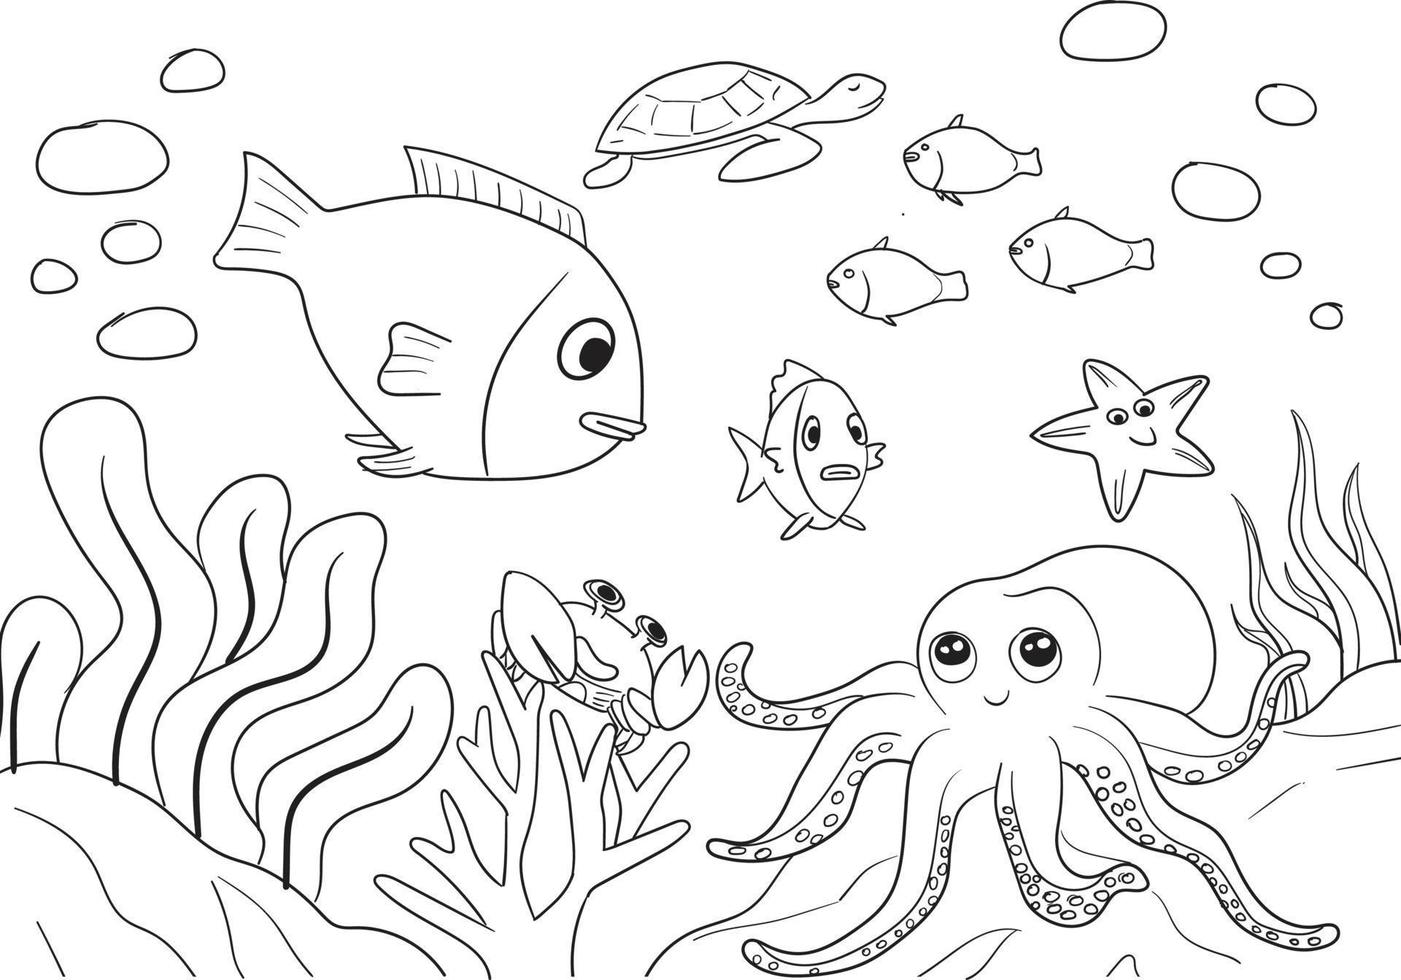 Book coloring animals under the sea vector